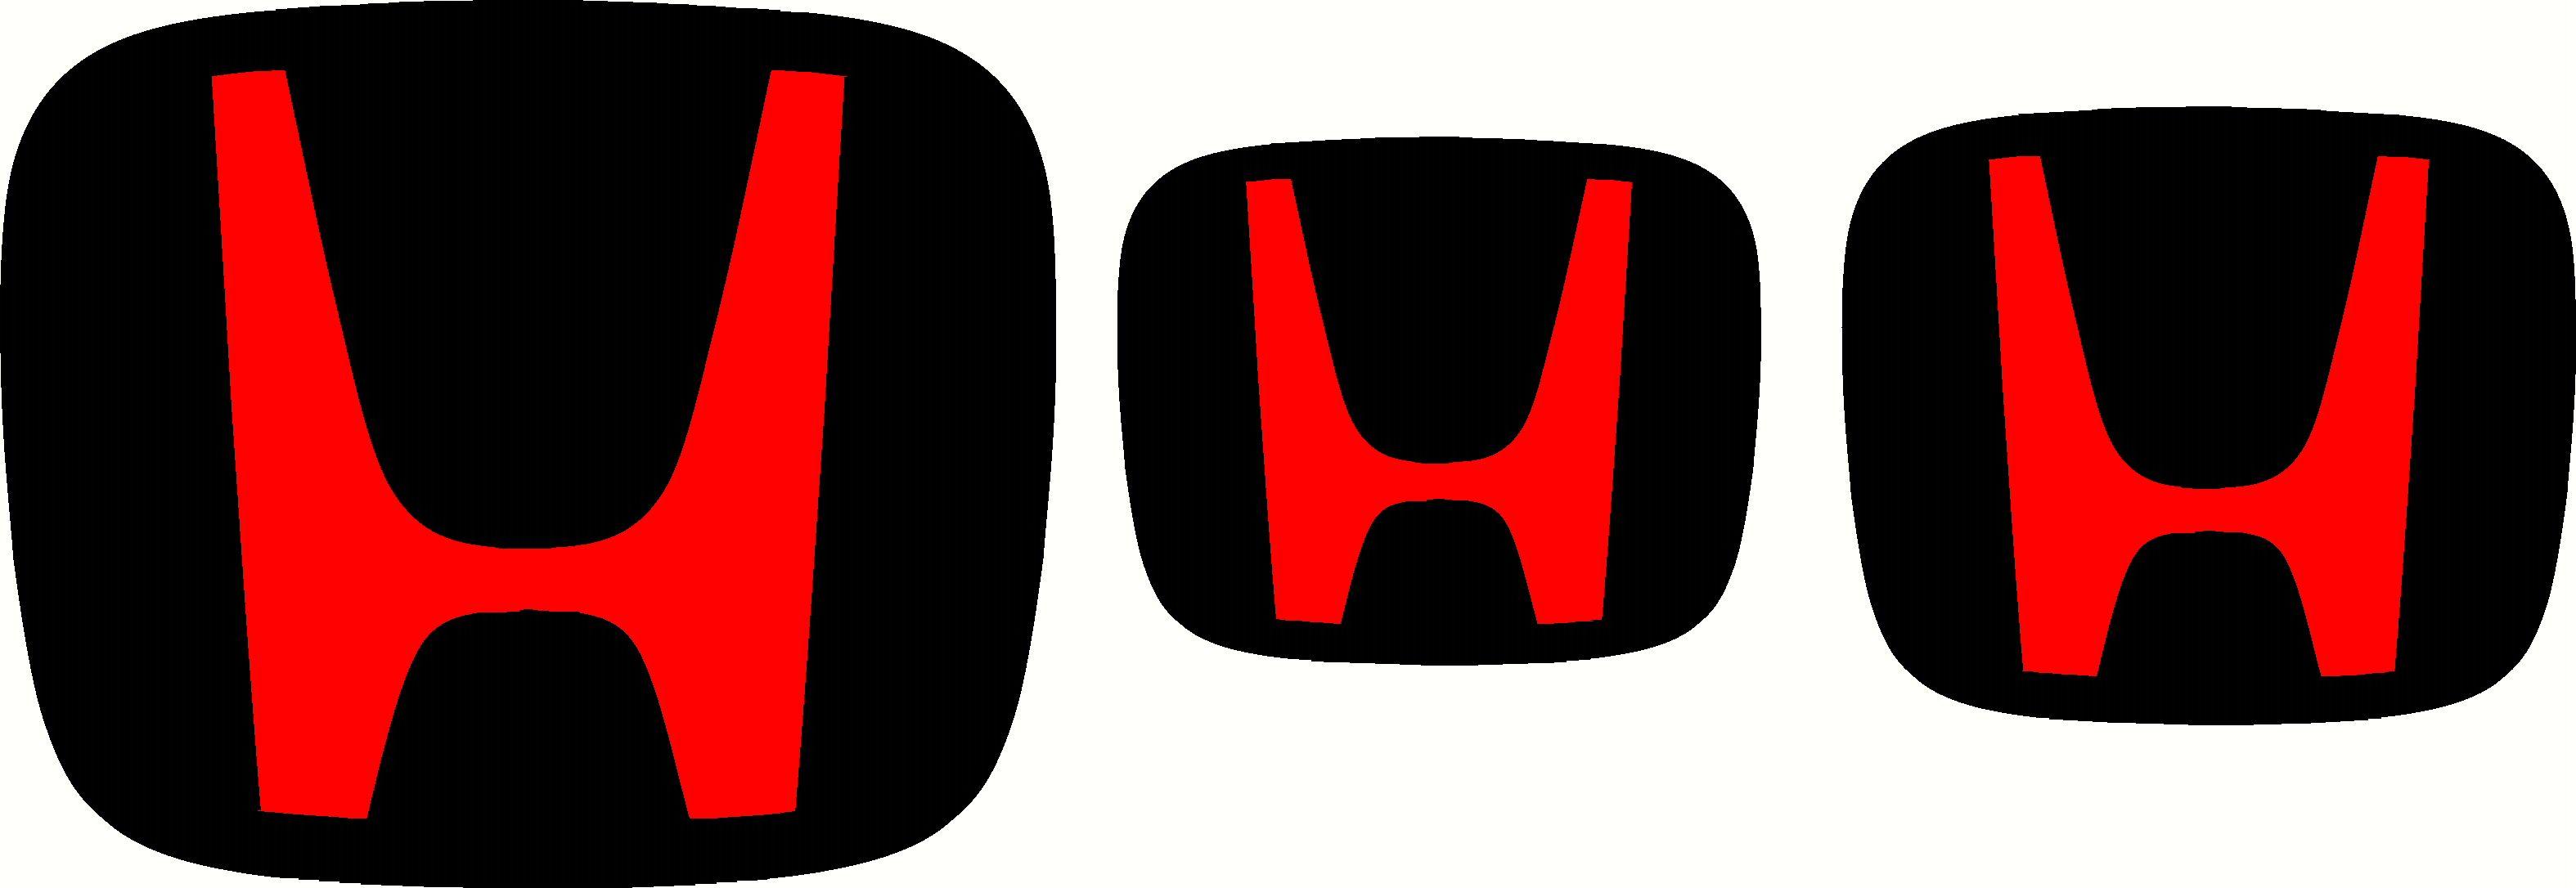 Honda Civic Type R Logo - Honda Civic Type R EP3 Pre Facelift Gel Badge Overlays - Optimus ...